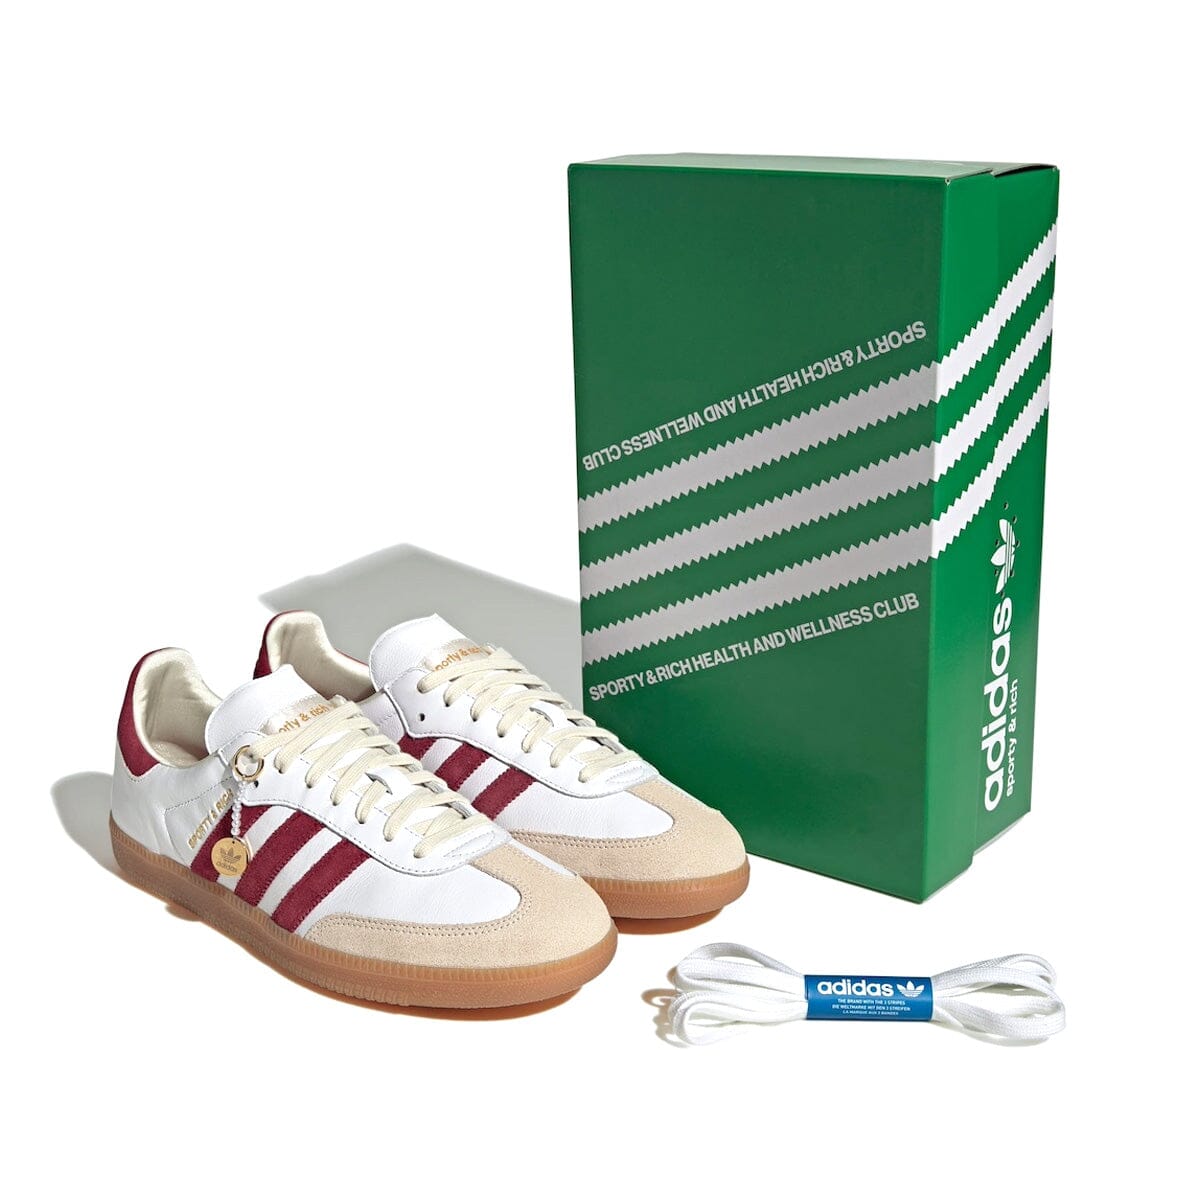 Adidas Samba Sporty & Rich White Collegiate Burgundy Samba Blizz Sneakers 